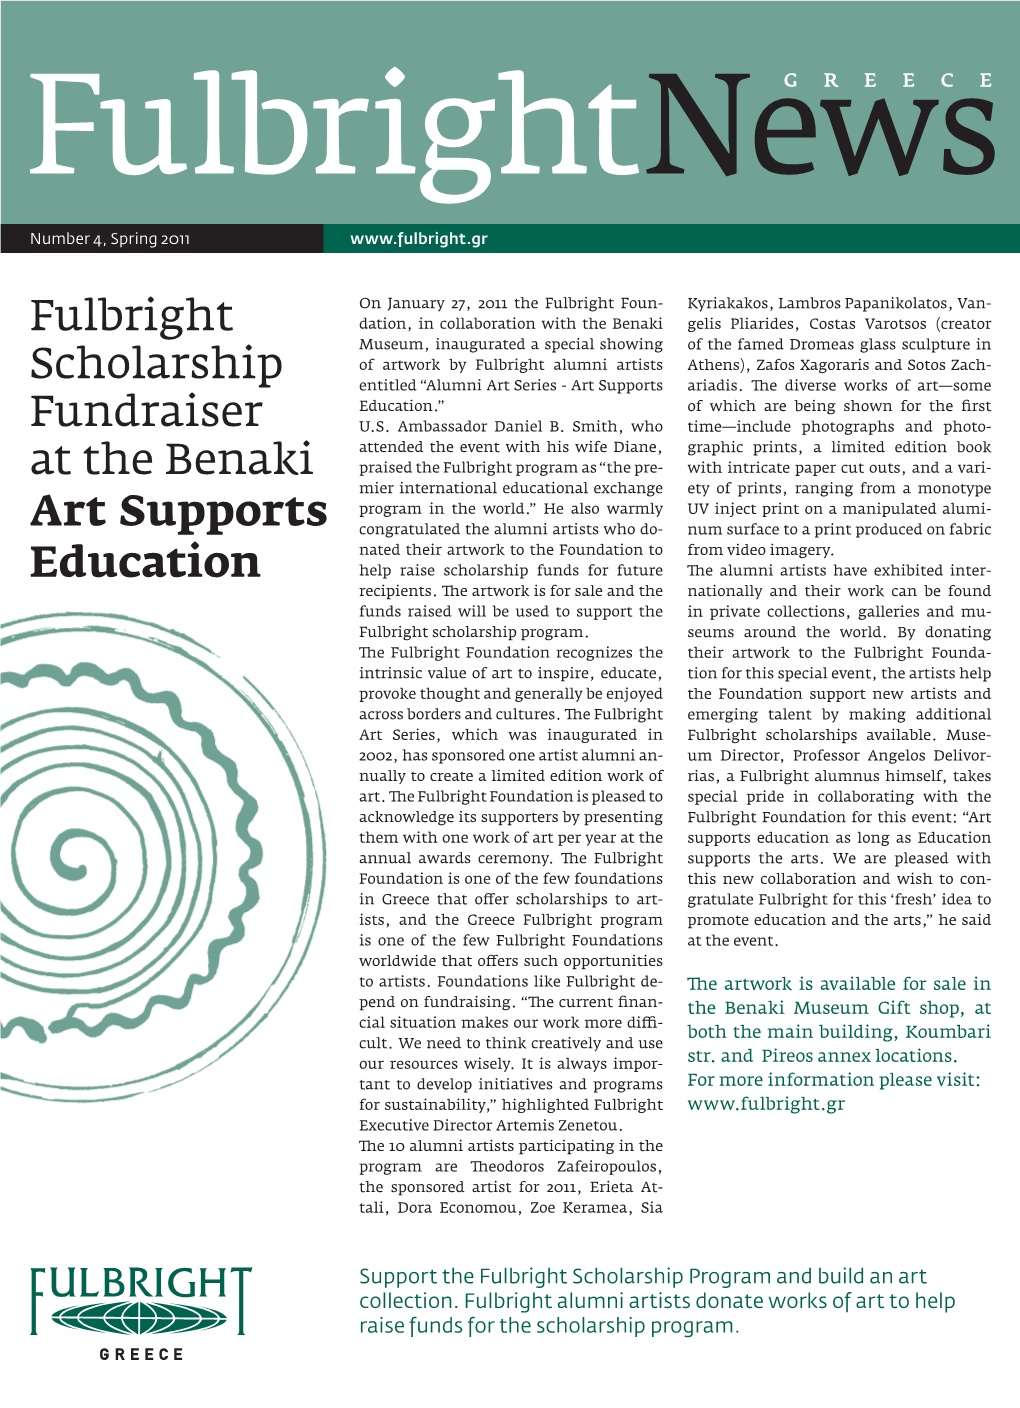 Fulbright Scholarship Fundraiser at the Benaki Art Supports Education